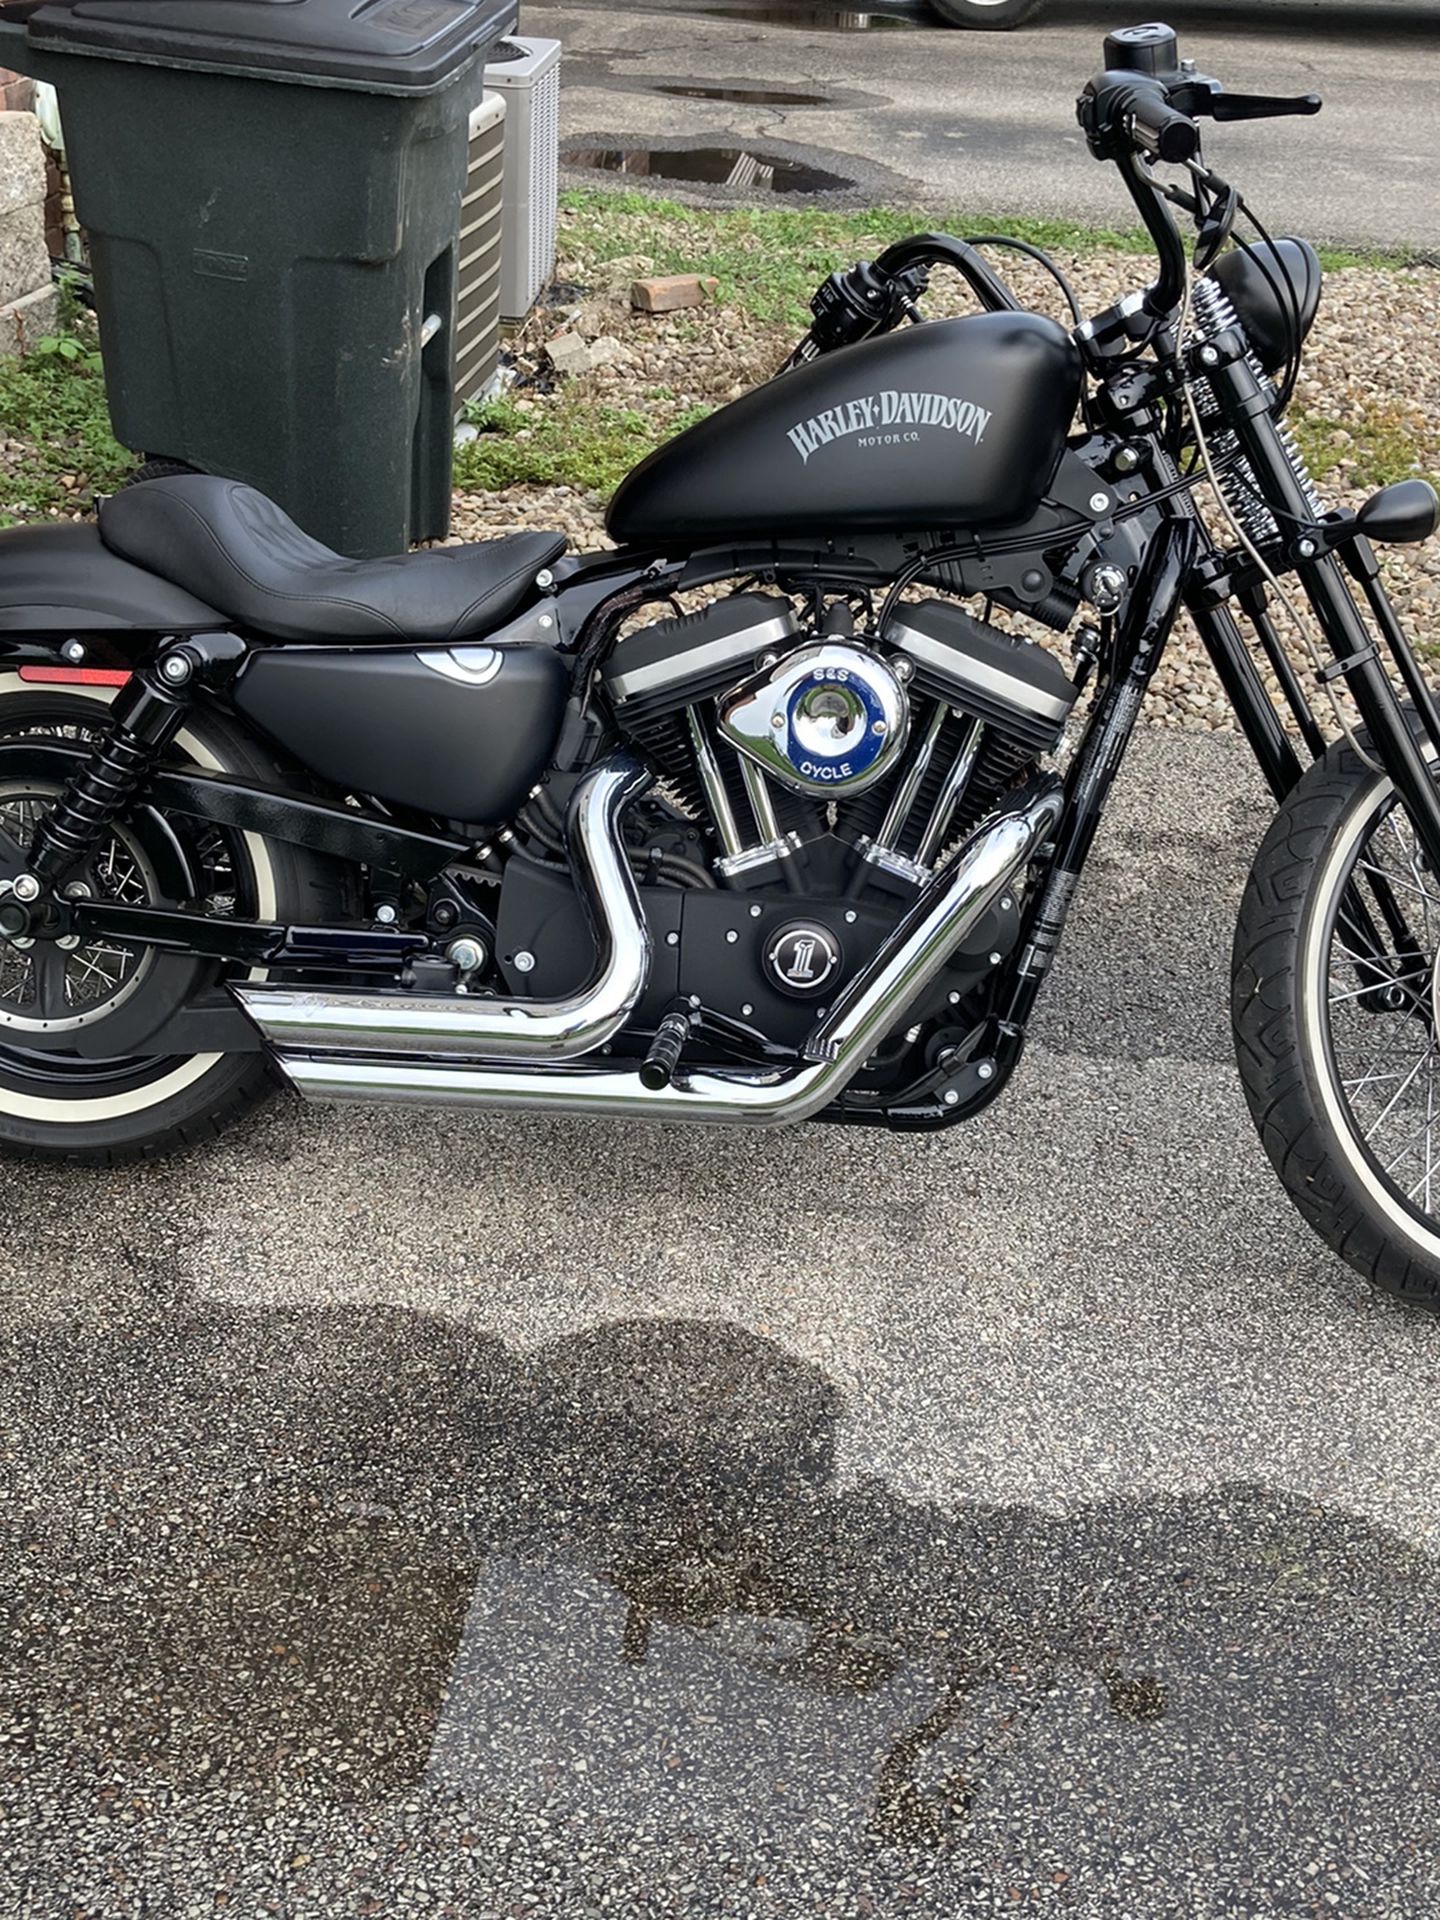 2015 Harley Davidson 883 iron